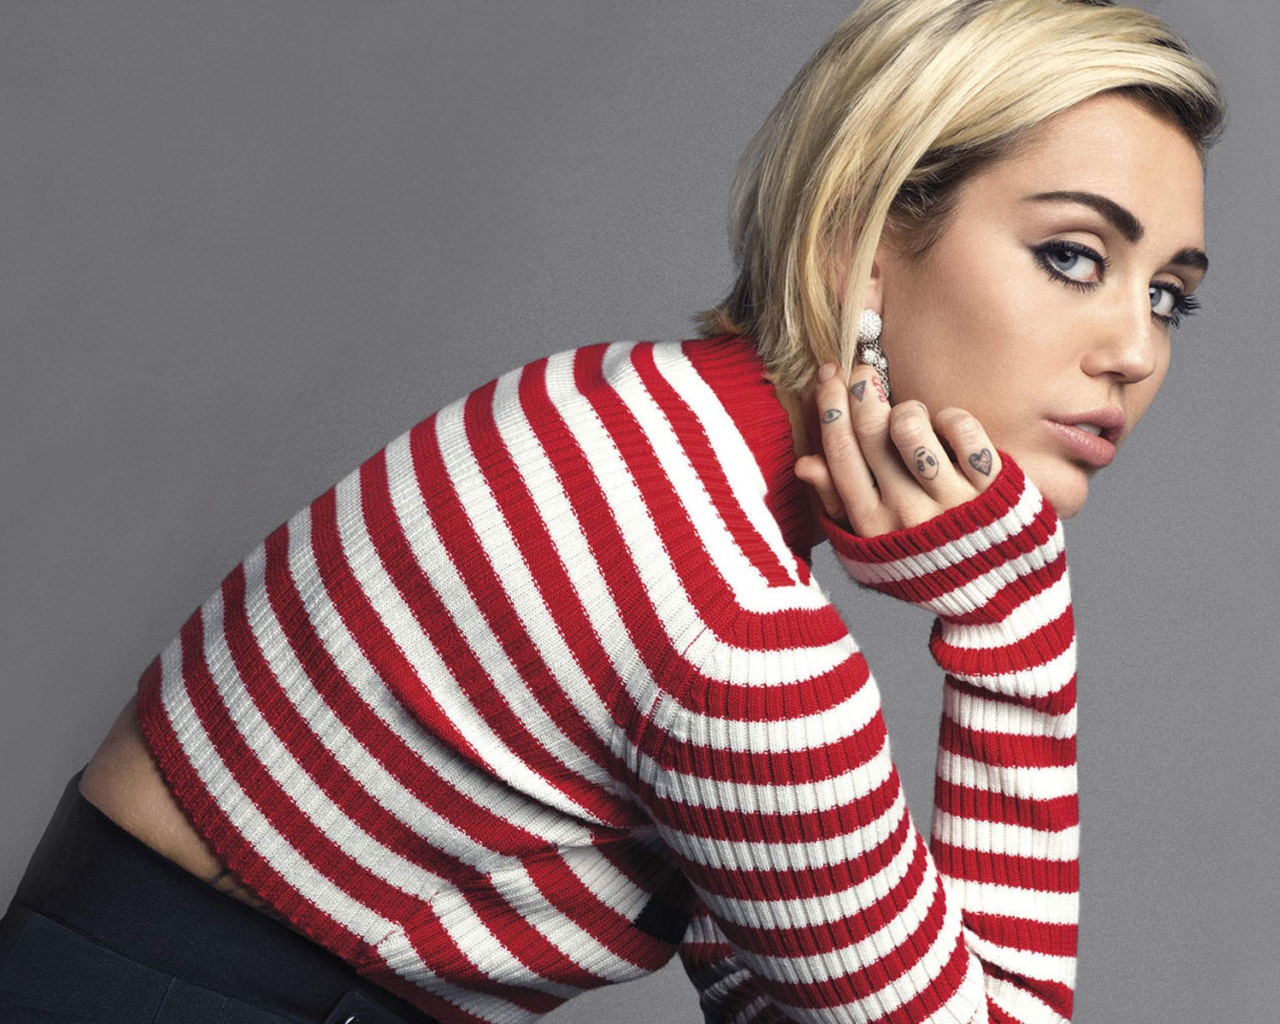 Popular singer Miley Cyrus, 2017